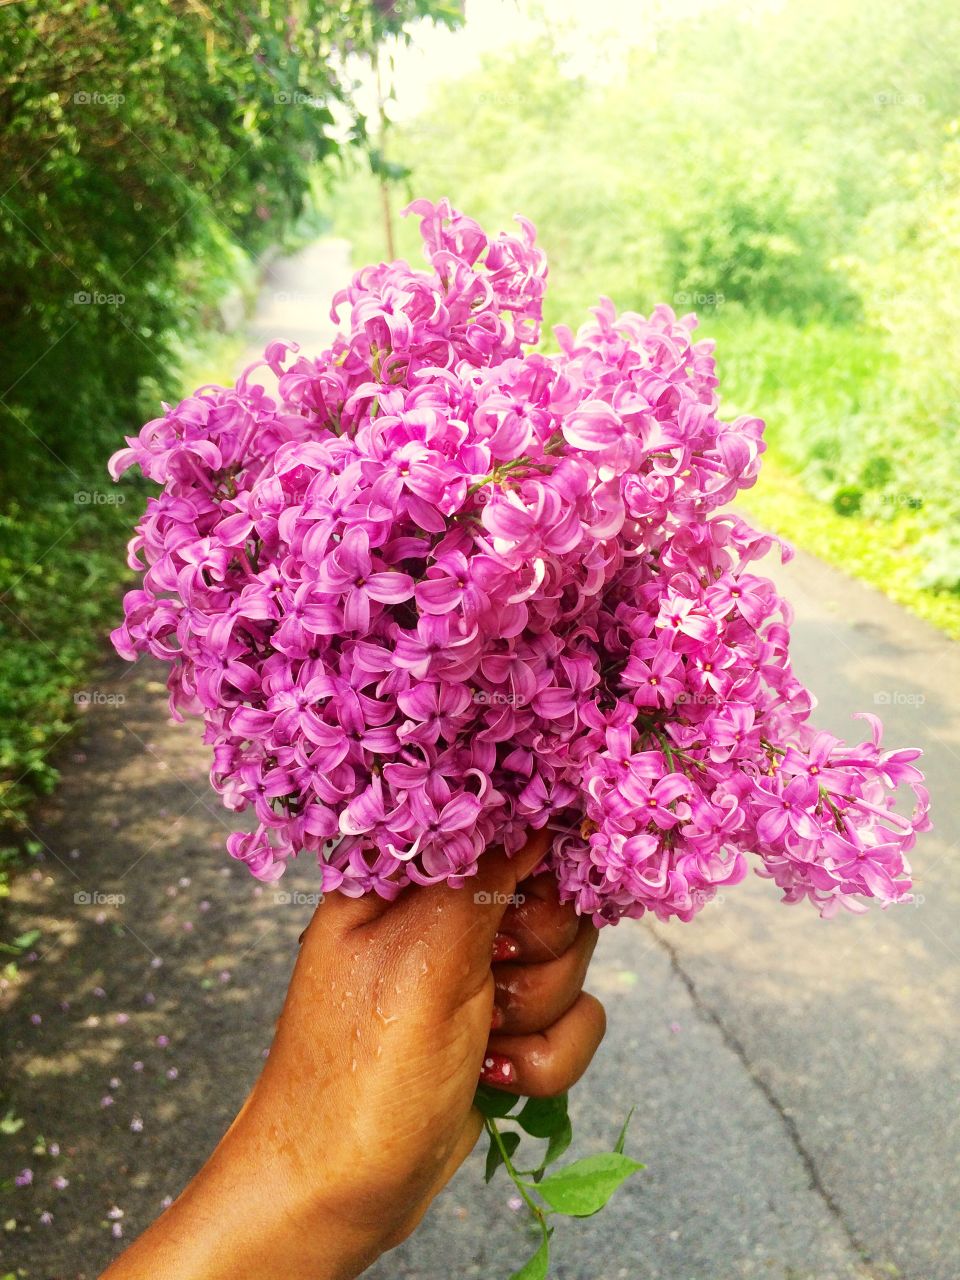 Flowers 💐 flowers 🌸 